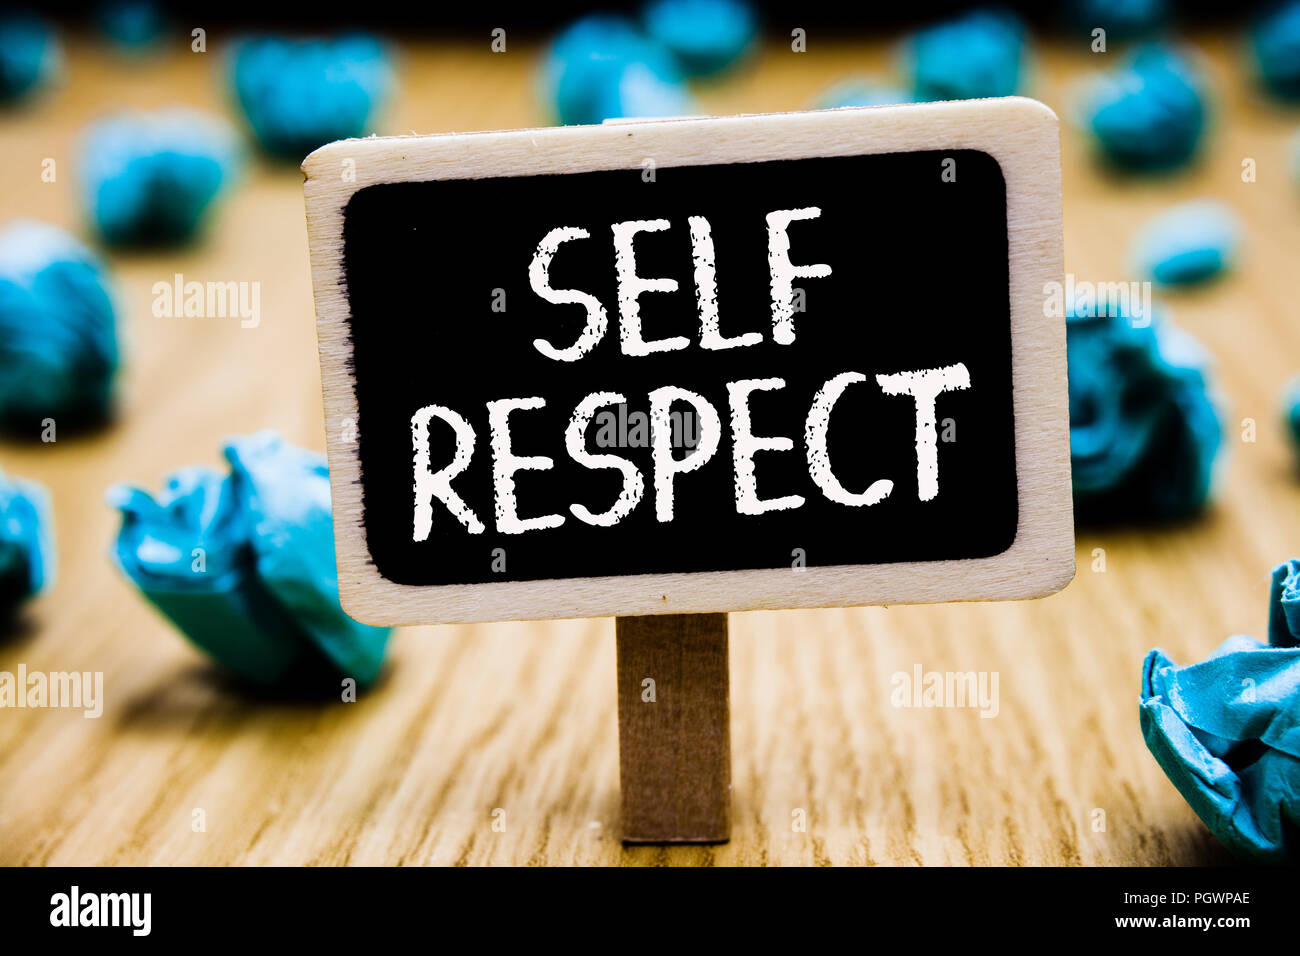 Essay on self respect